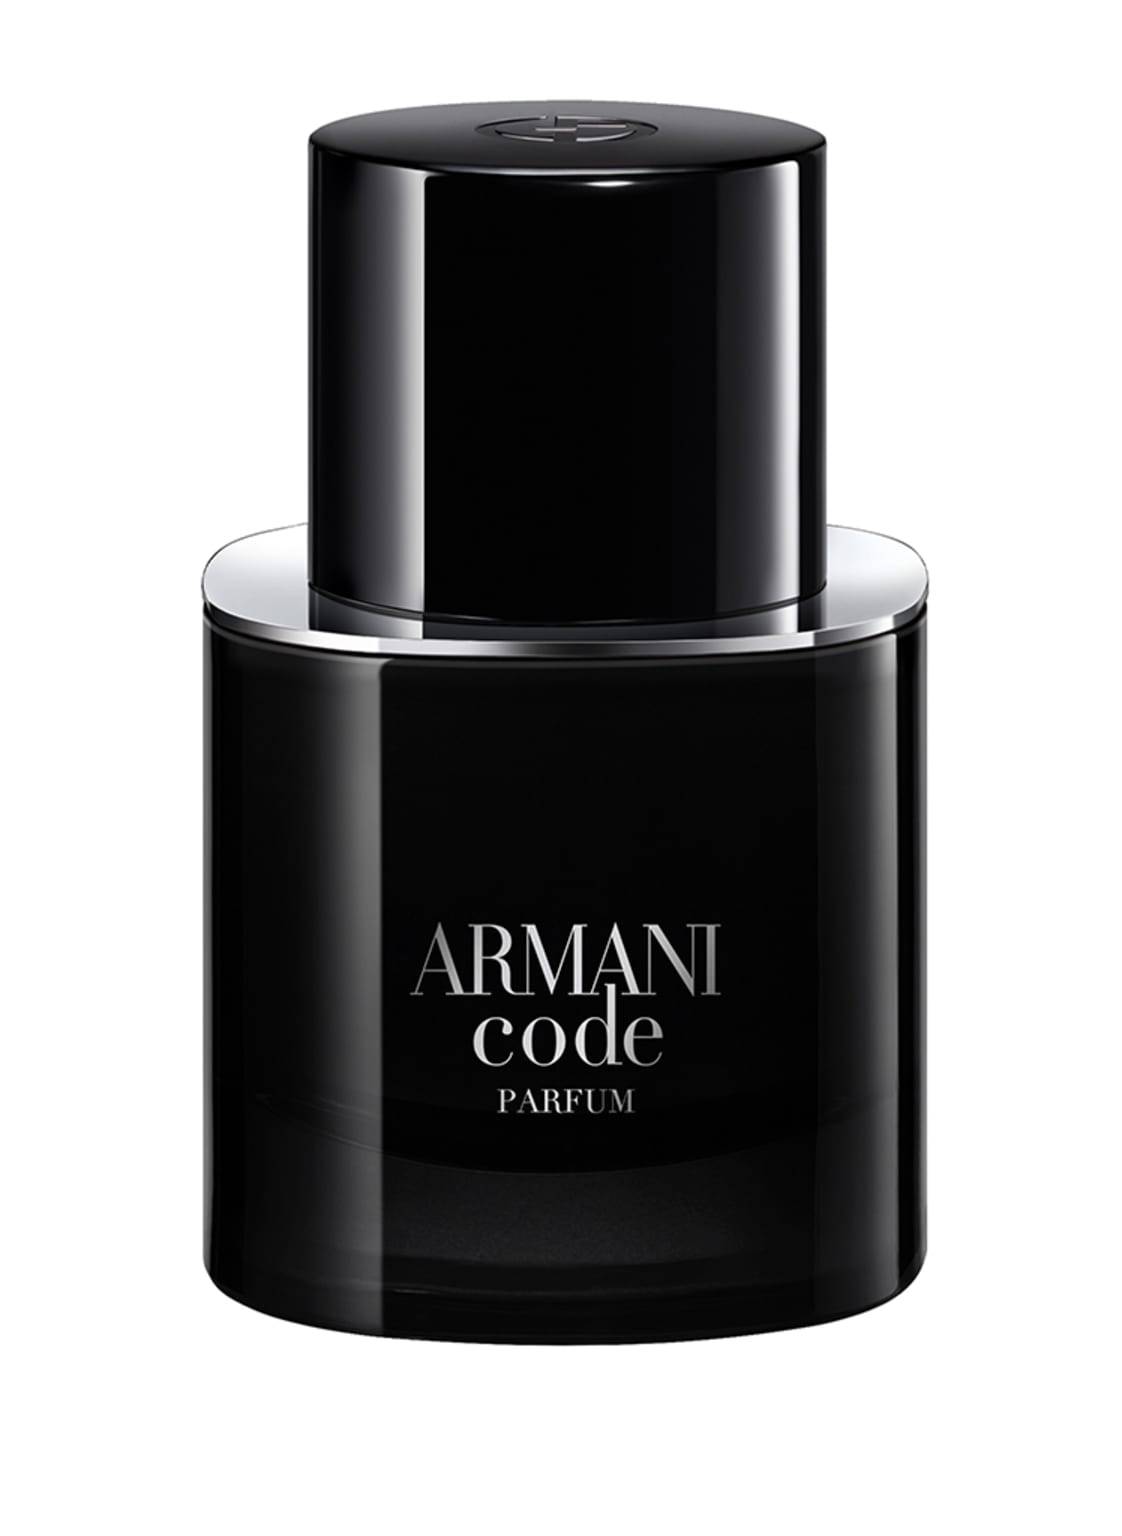 Giorgio Armani Beauty Code Parfum 50 ml von GIORGIO ARMANI BEAUTY